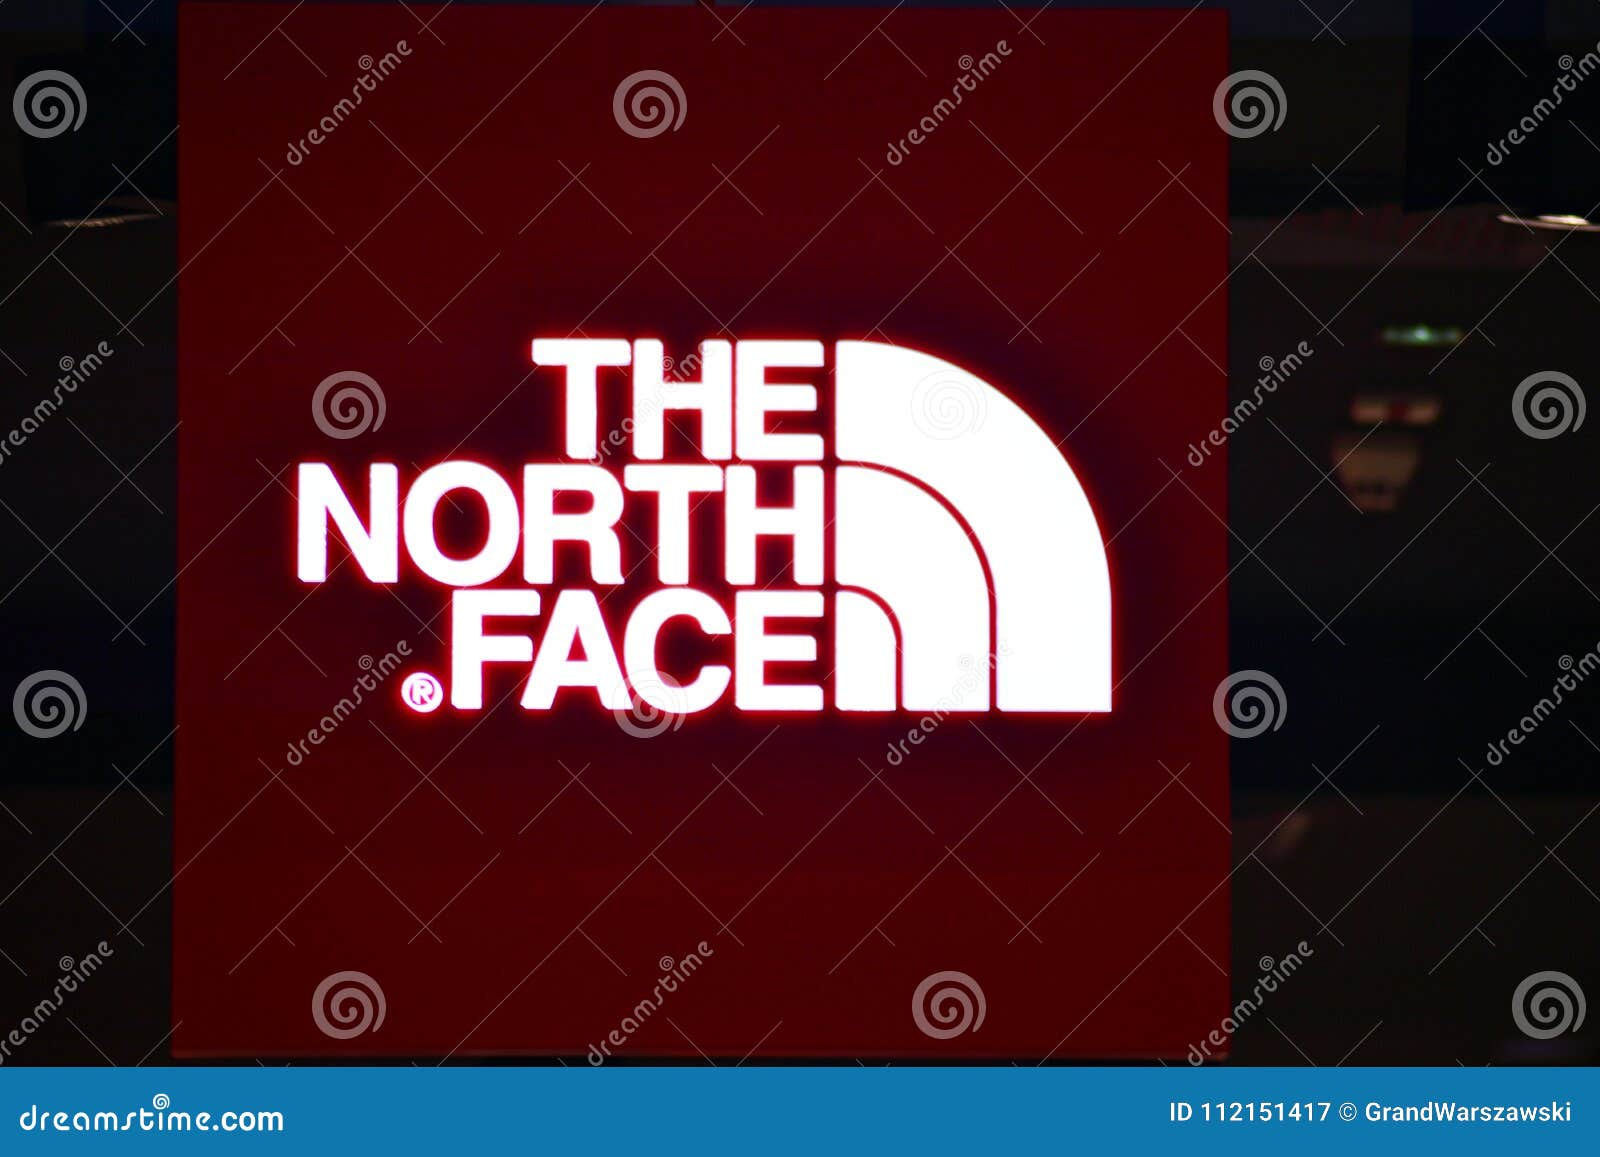 The North Face Company Factory Sale, 50% OFF | www.ingeniovirtual.com